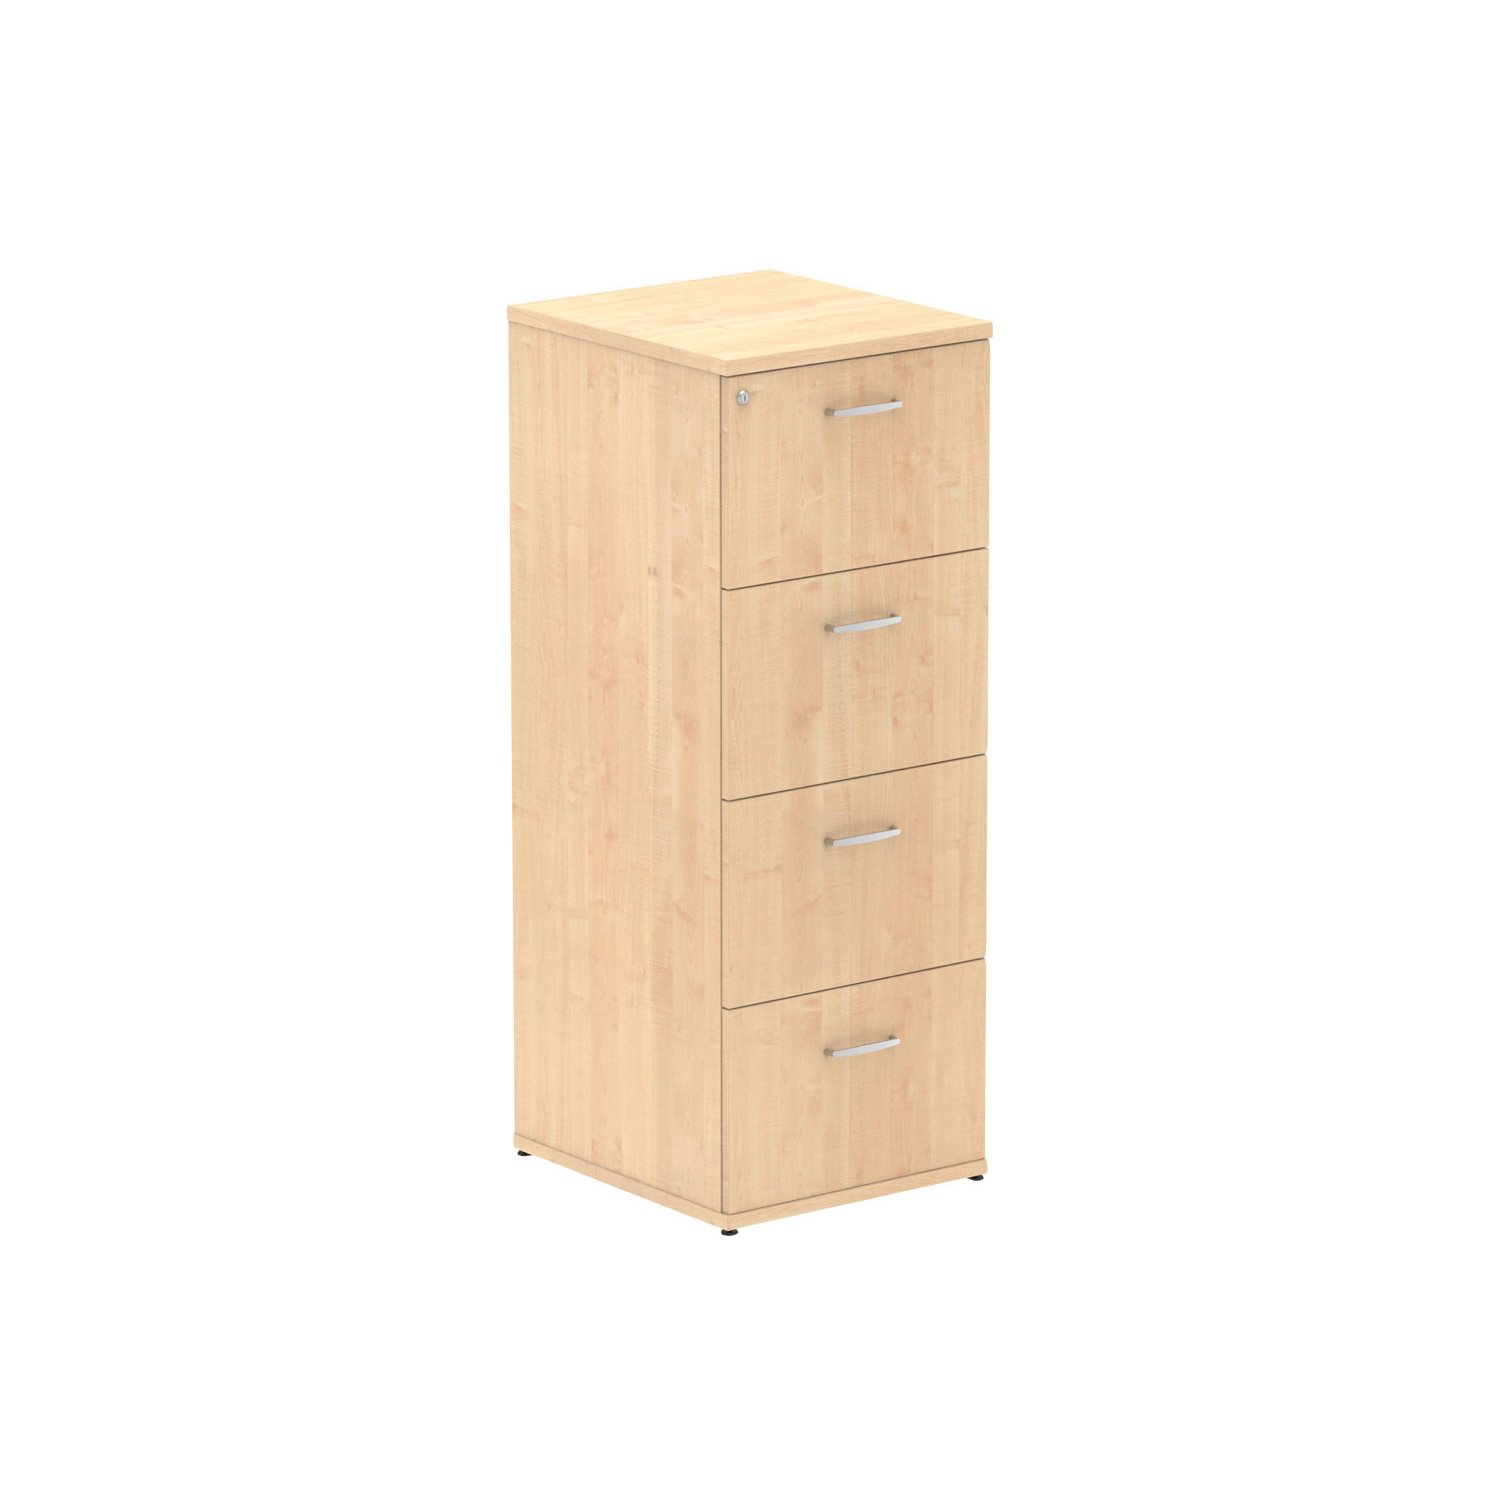 Vitali Filing Cabinets, Maple